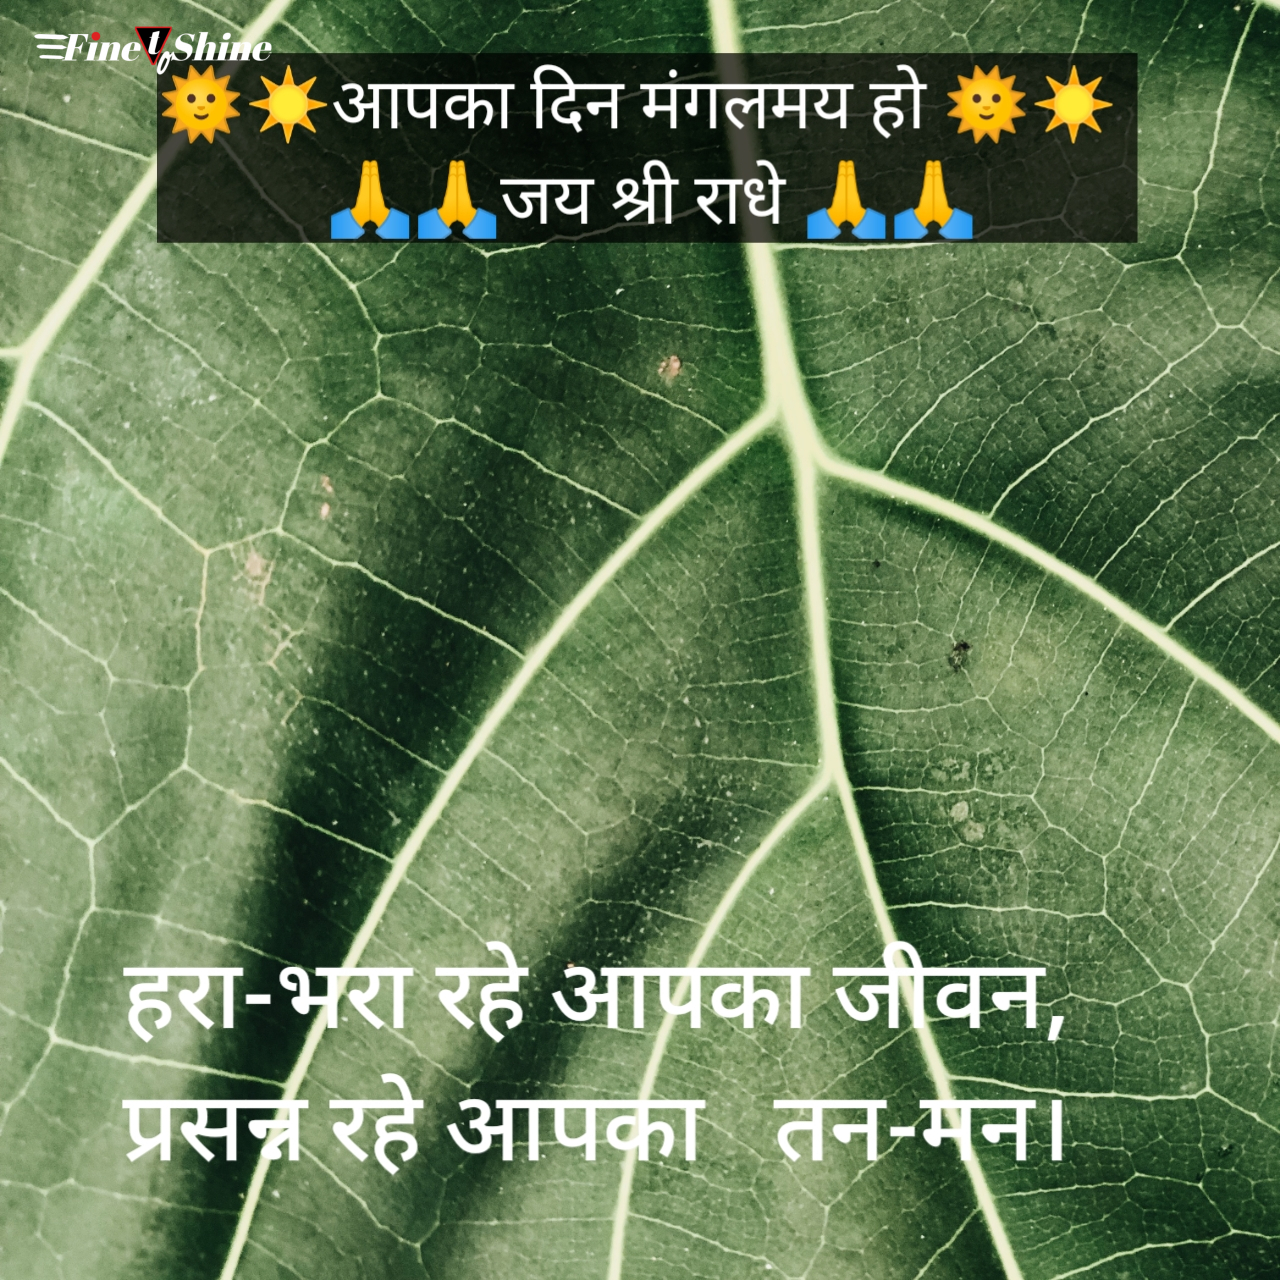 Good Morning Quotes In Hindi 10